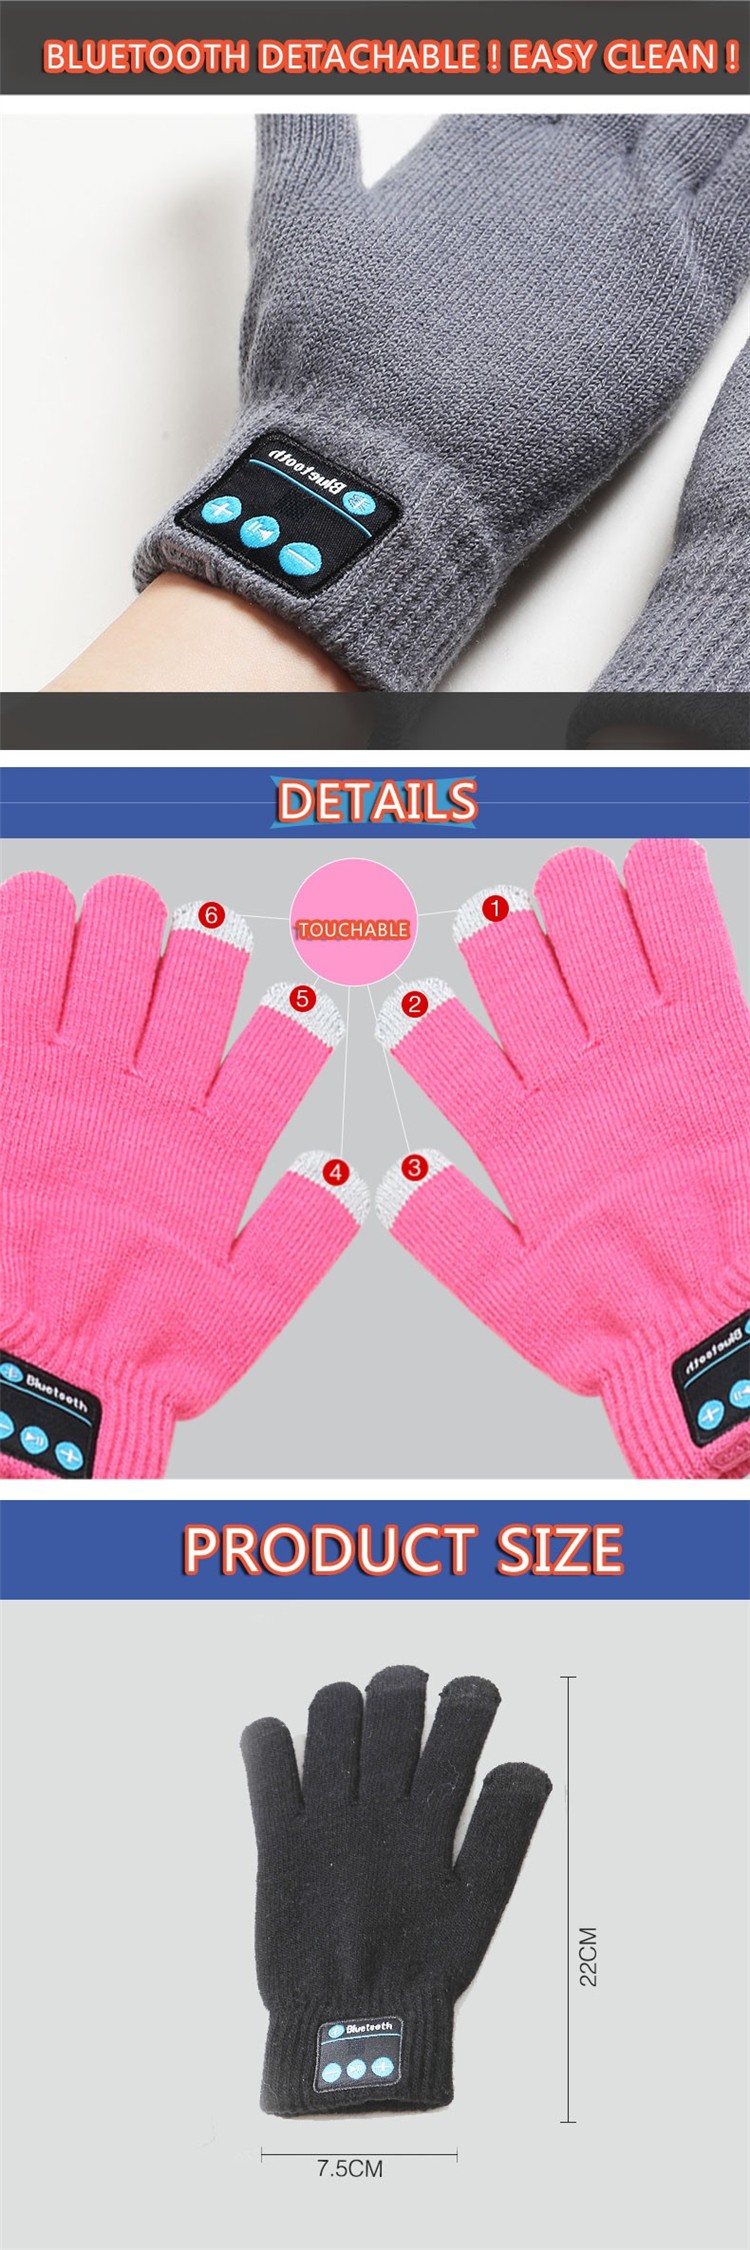 Mobile Phone Earphones Bluetooth Gloves